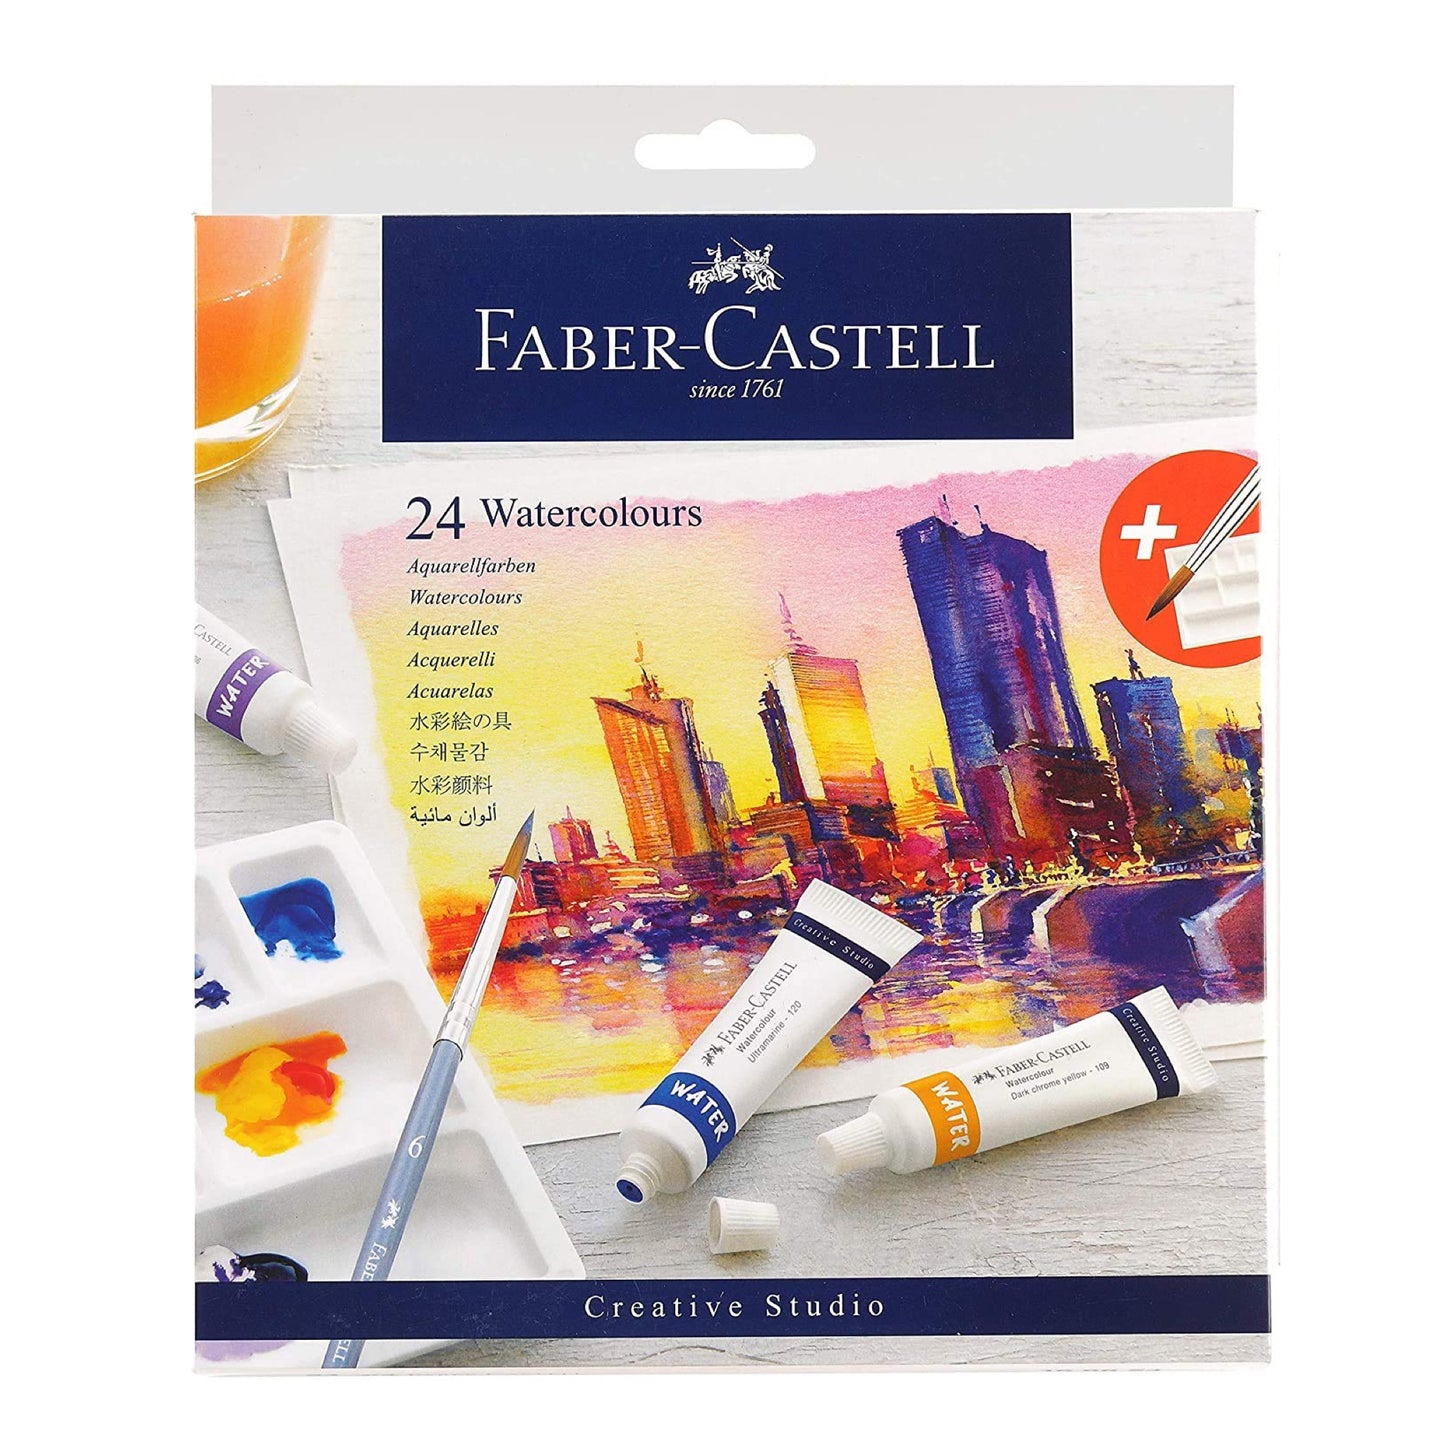 Faber Castell Creative Studio Watercolors 9 ml 24 colors || الوان مائيه فيبر كستل 24 لون + فرشاه + بلته خلط